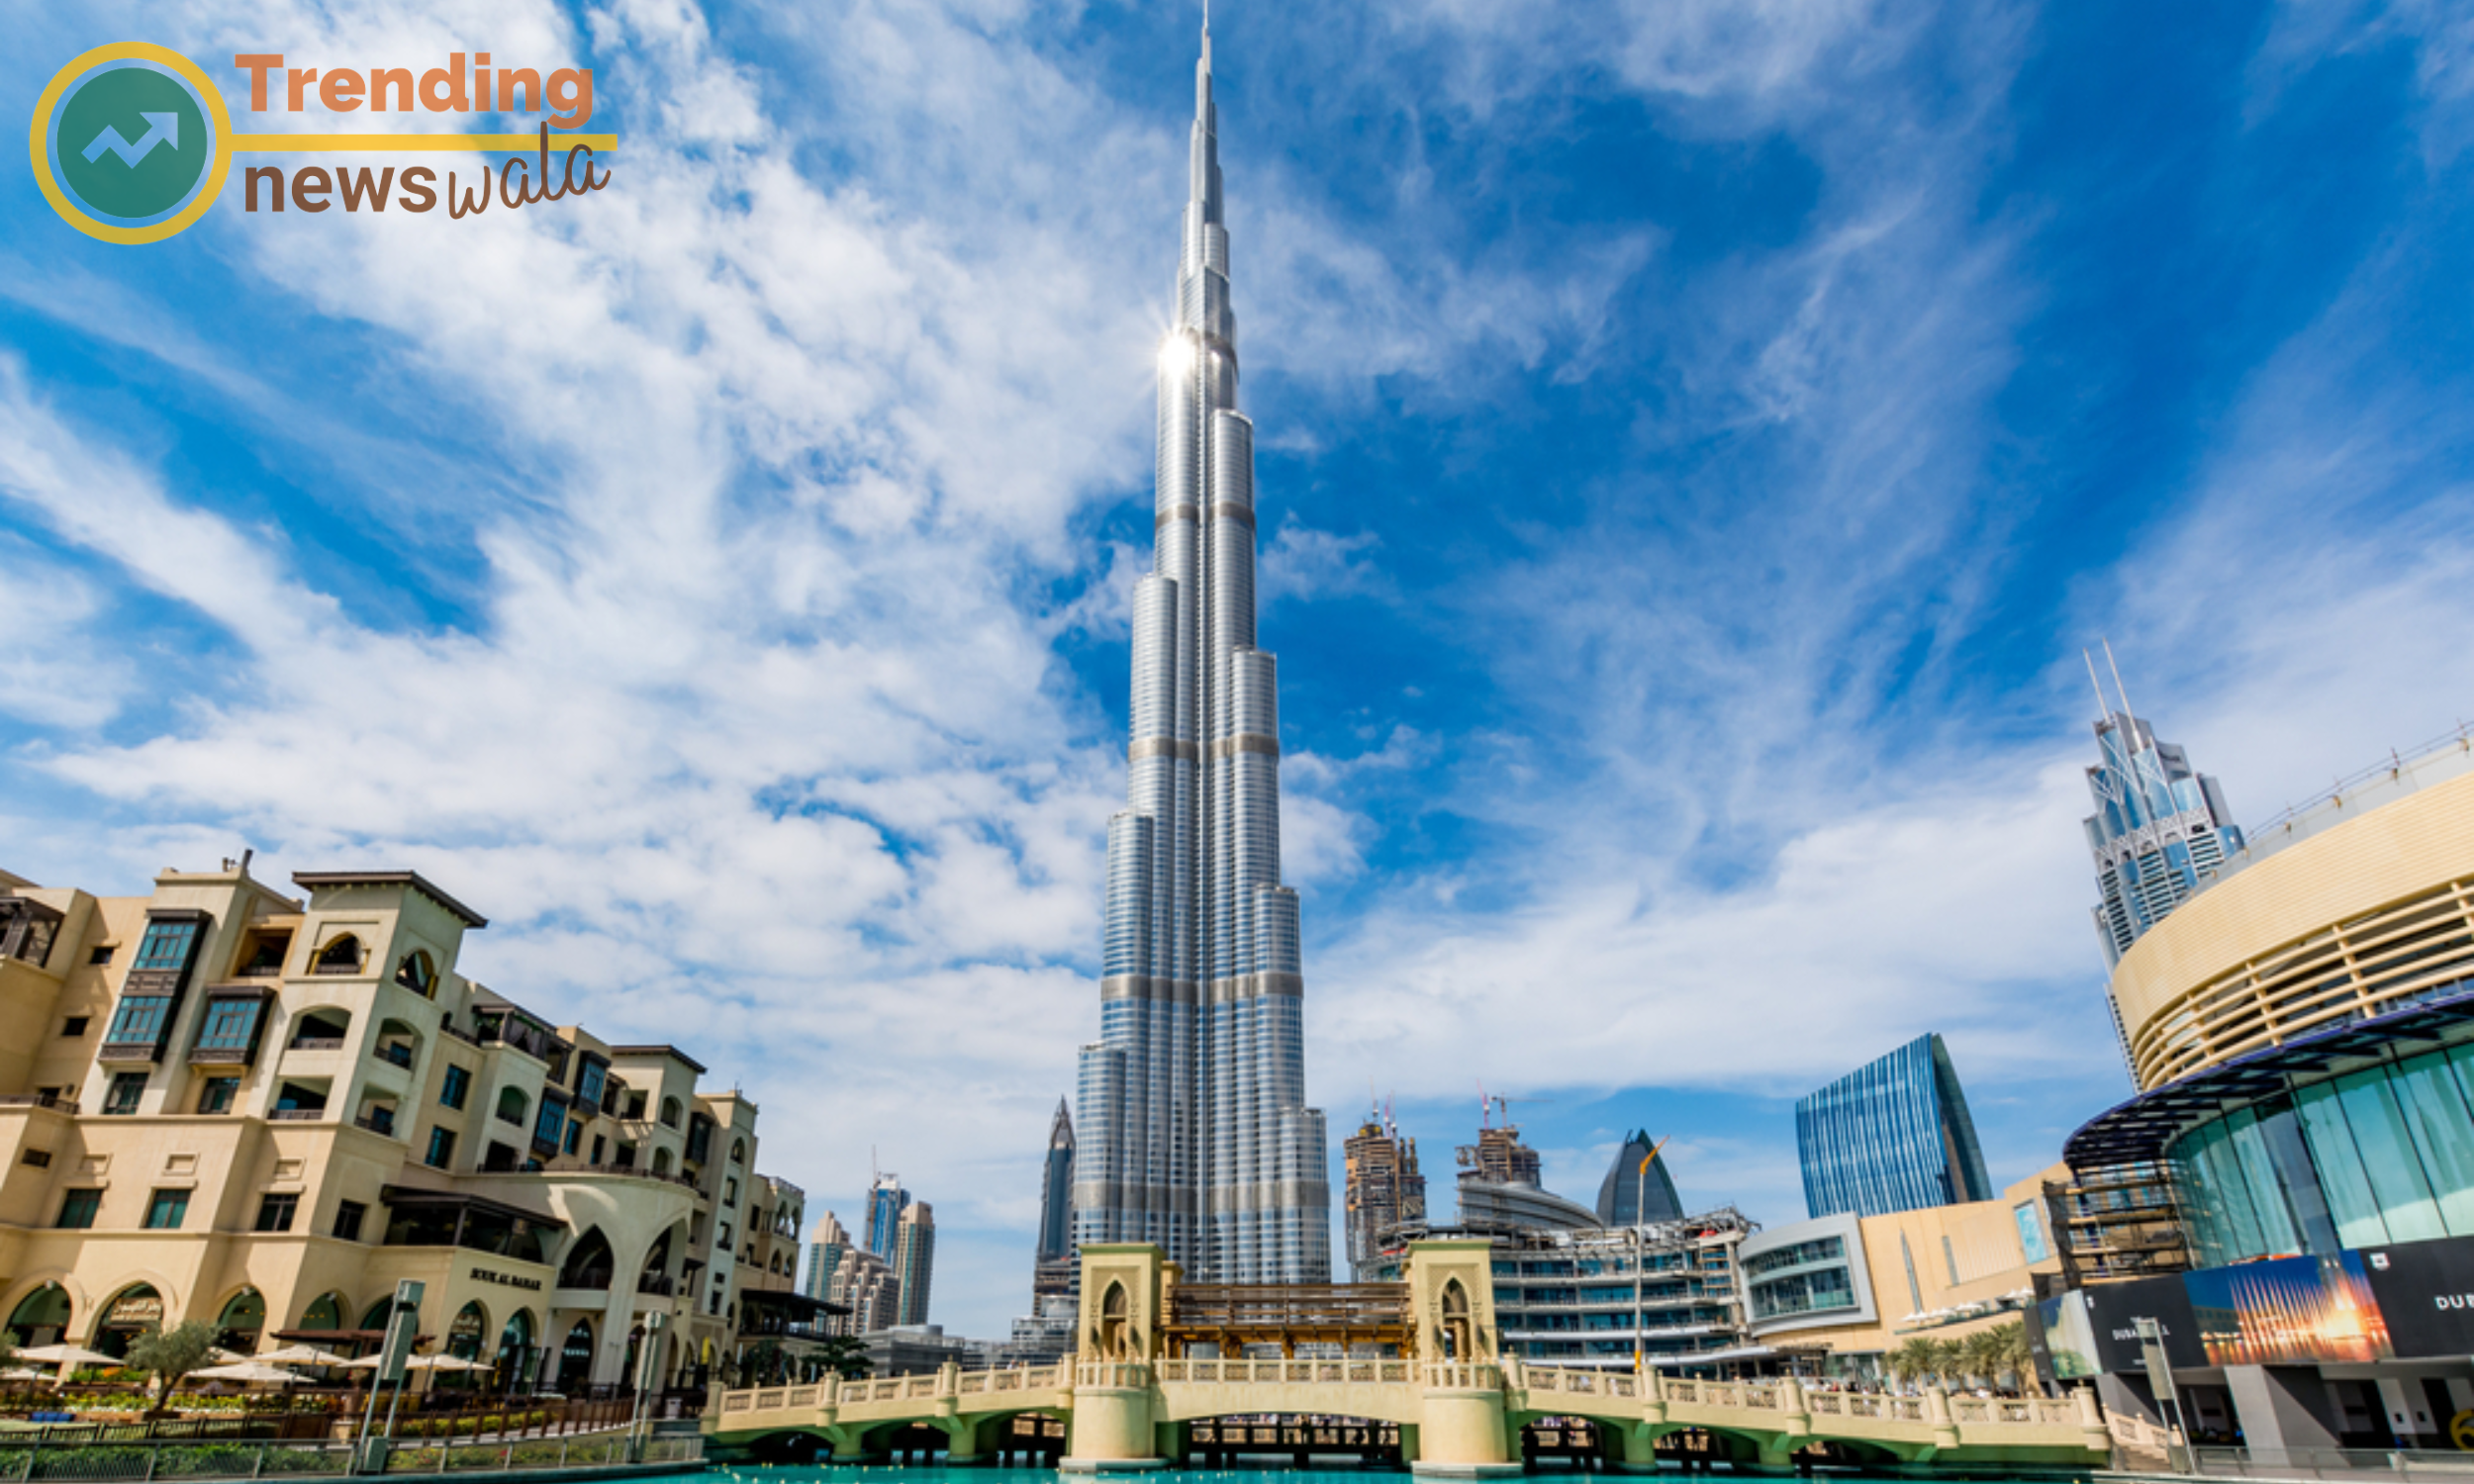 Dubai adventure with a visit to the iconic Burj Khalifa